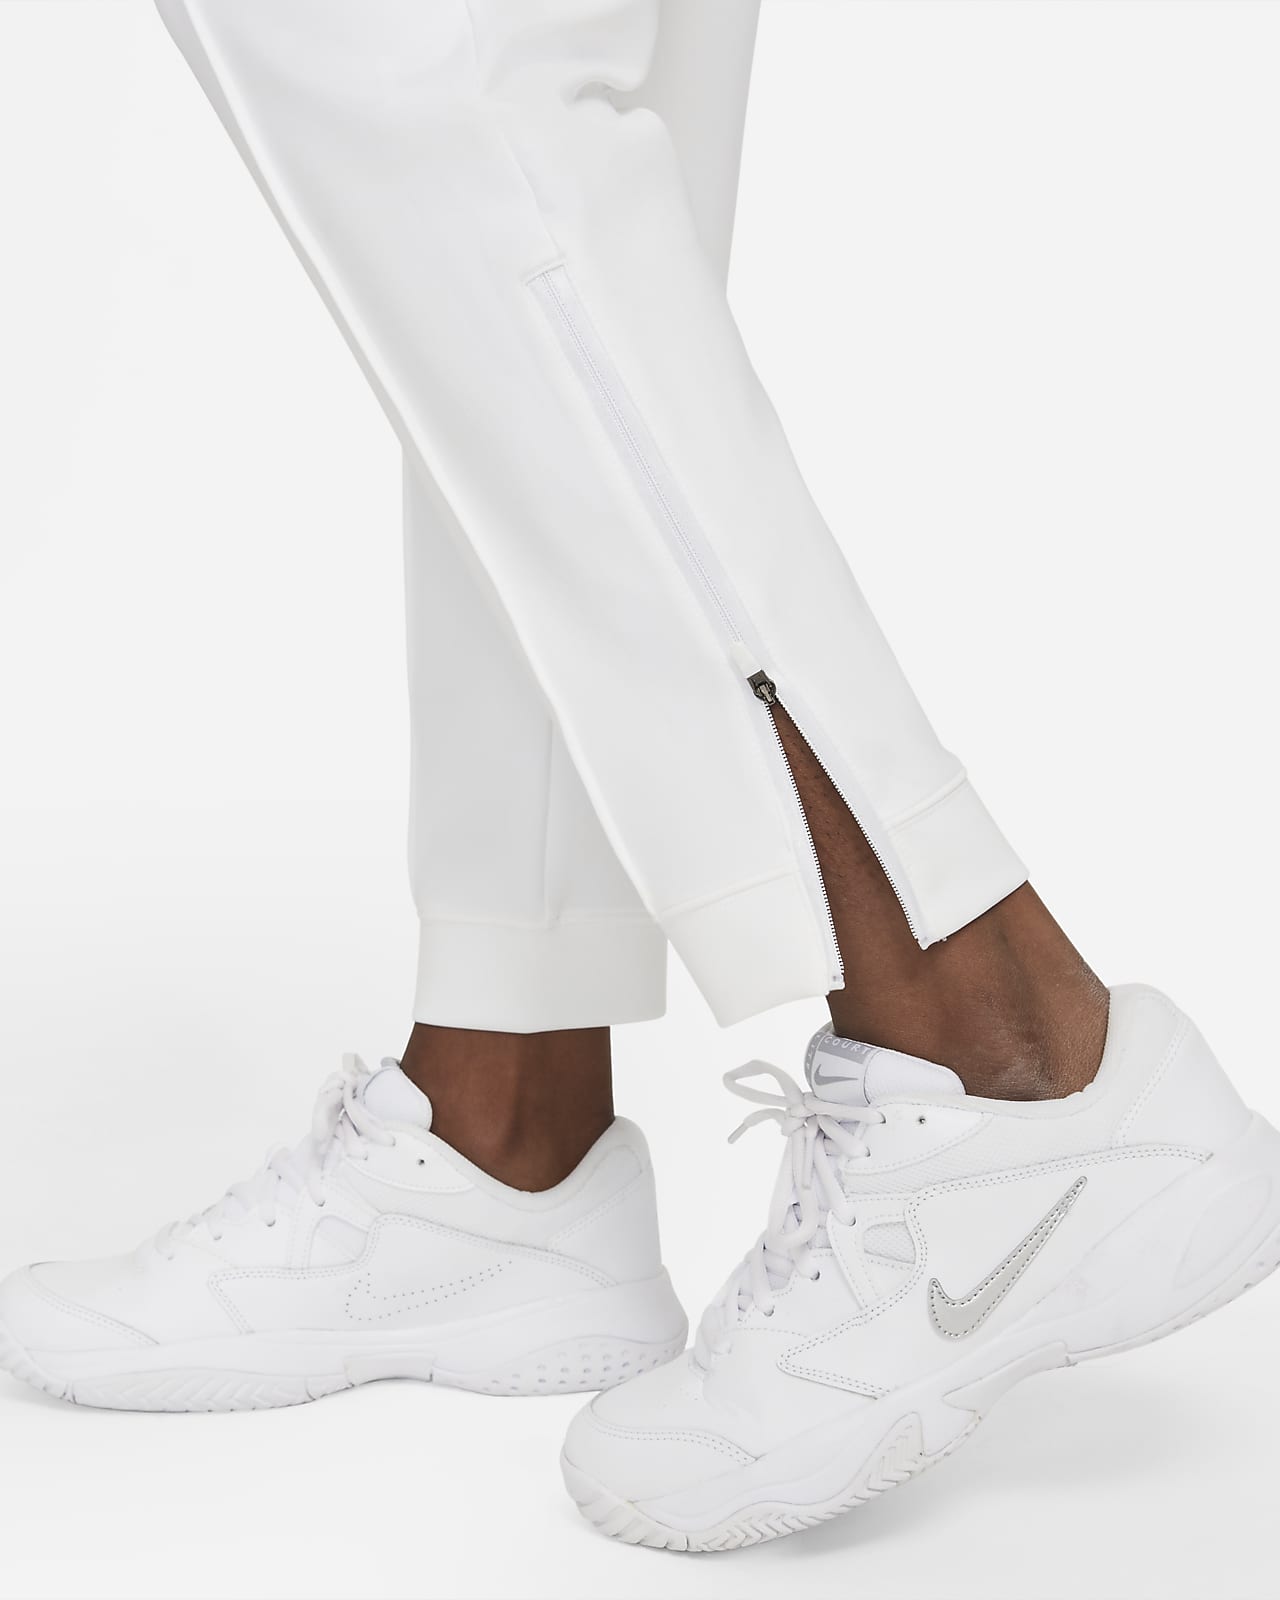 Nike Challenge Court women's tennis pants